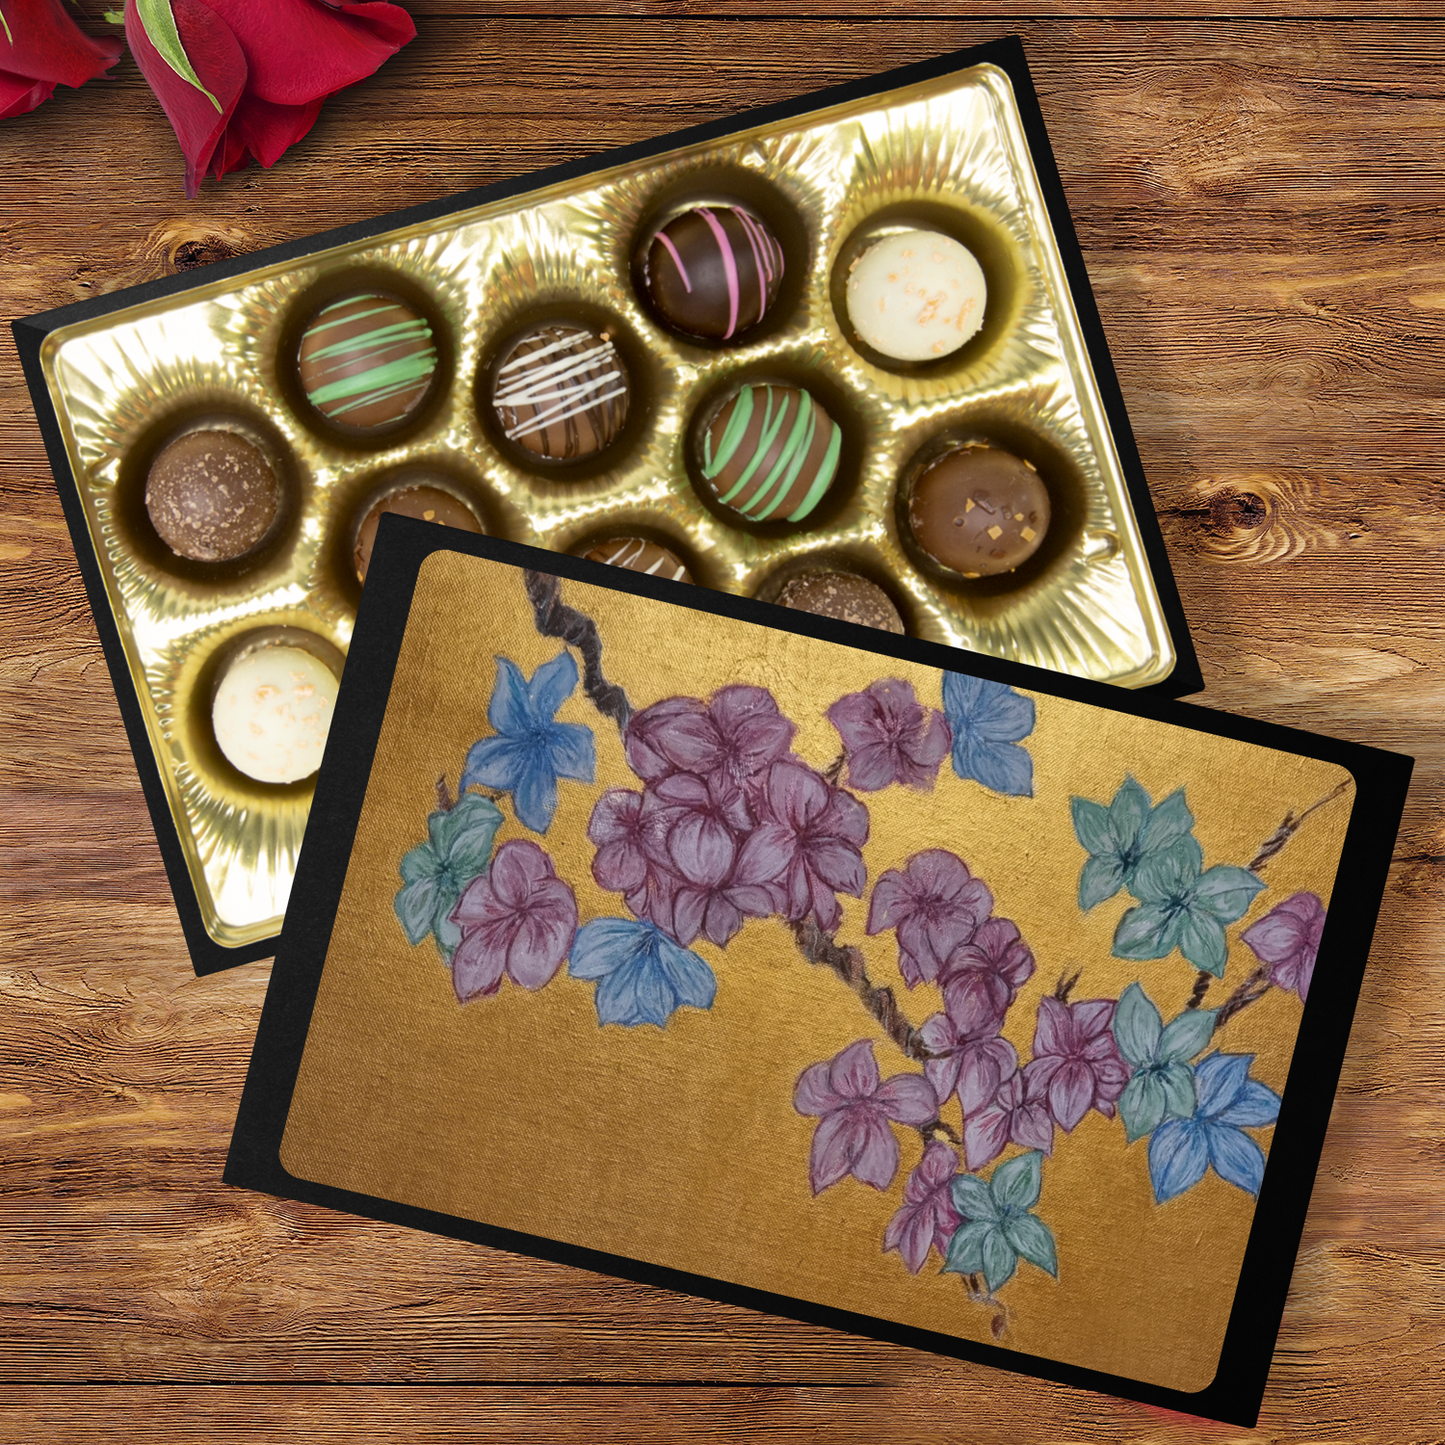 Handmade Chocolate Truffles in "3 Colors" Box